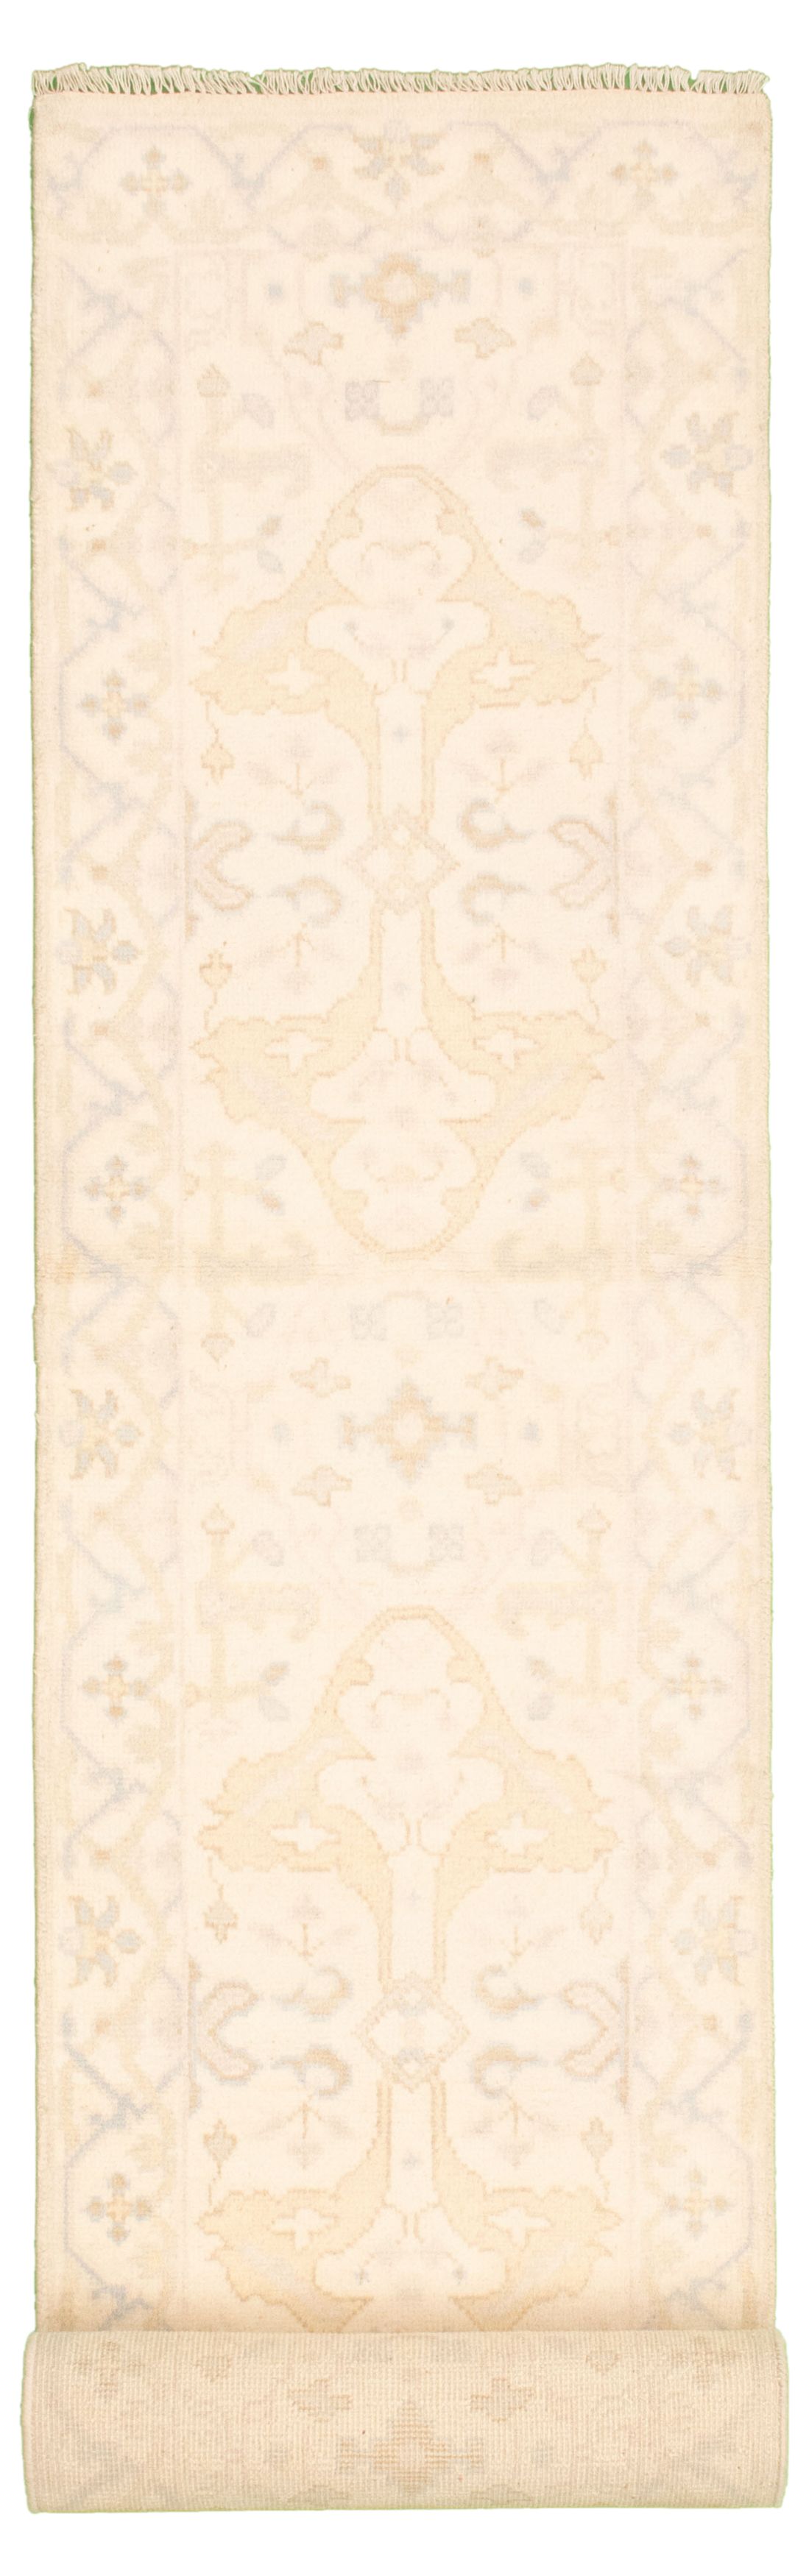 Hand-knotted Royal Ushak Cream Wool Rug 2'6" x 16'0" Size: 2'6" x 16'0"  